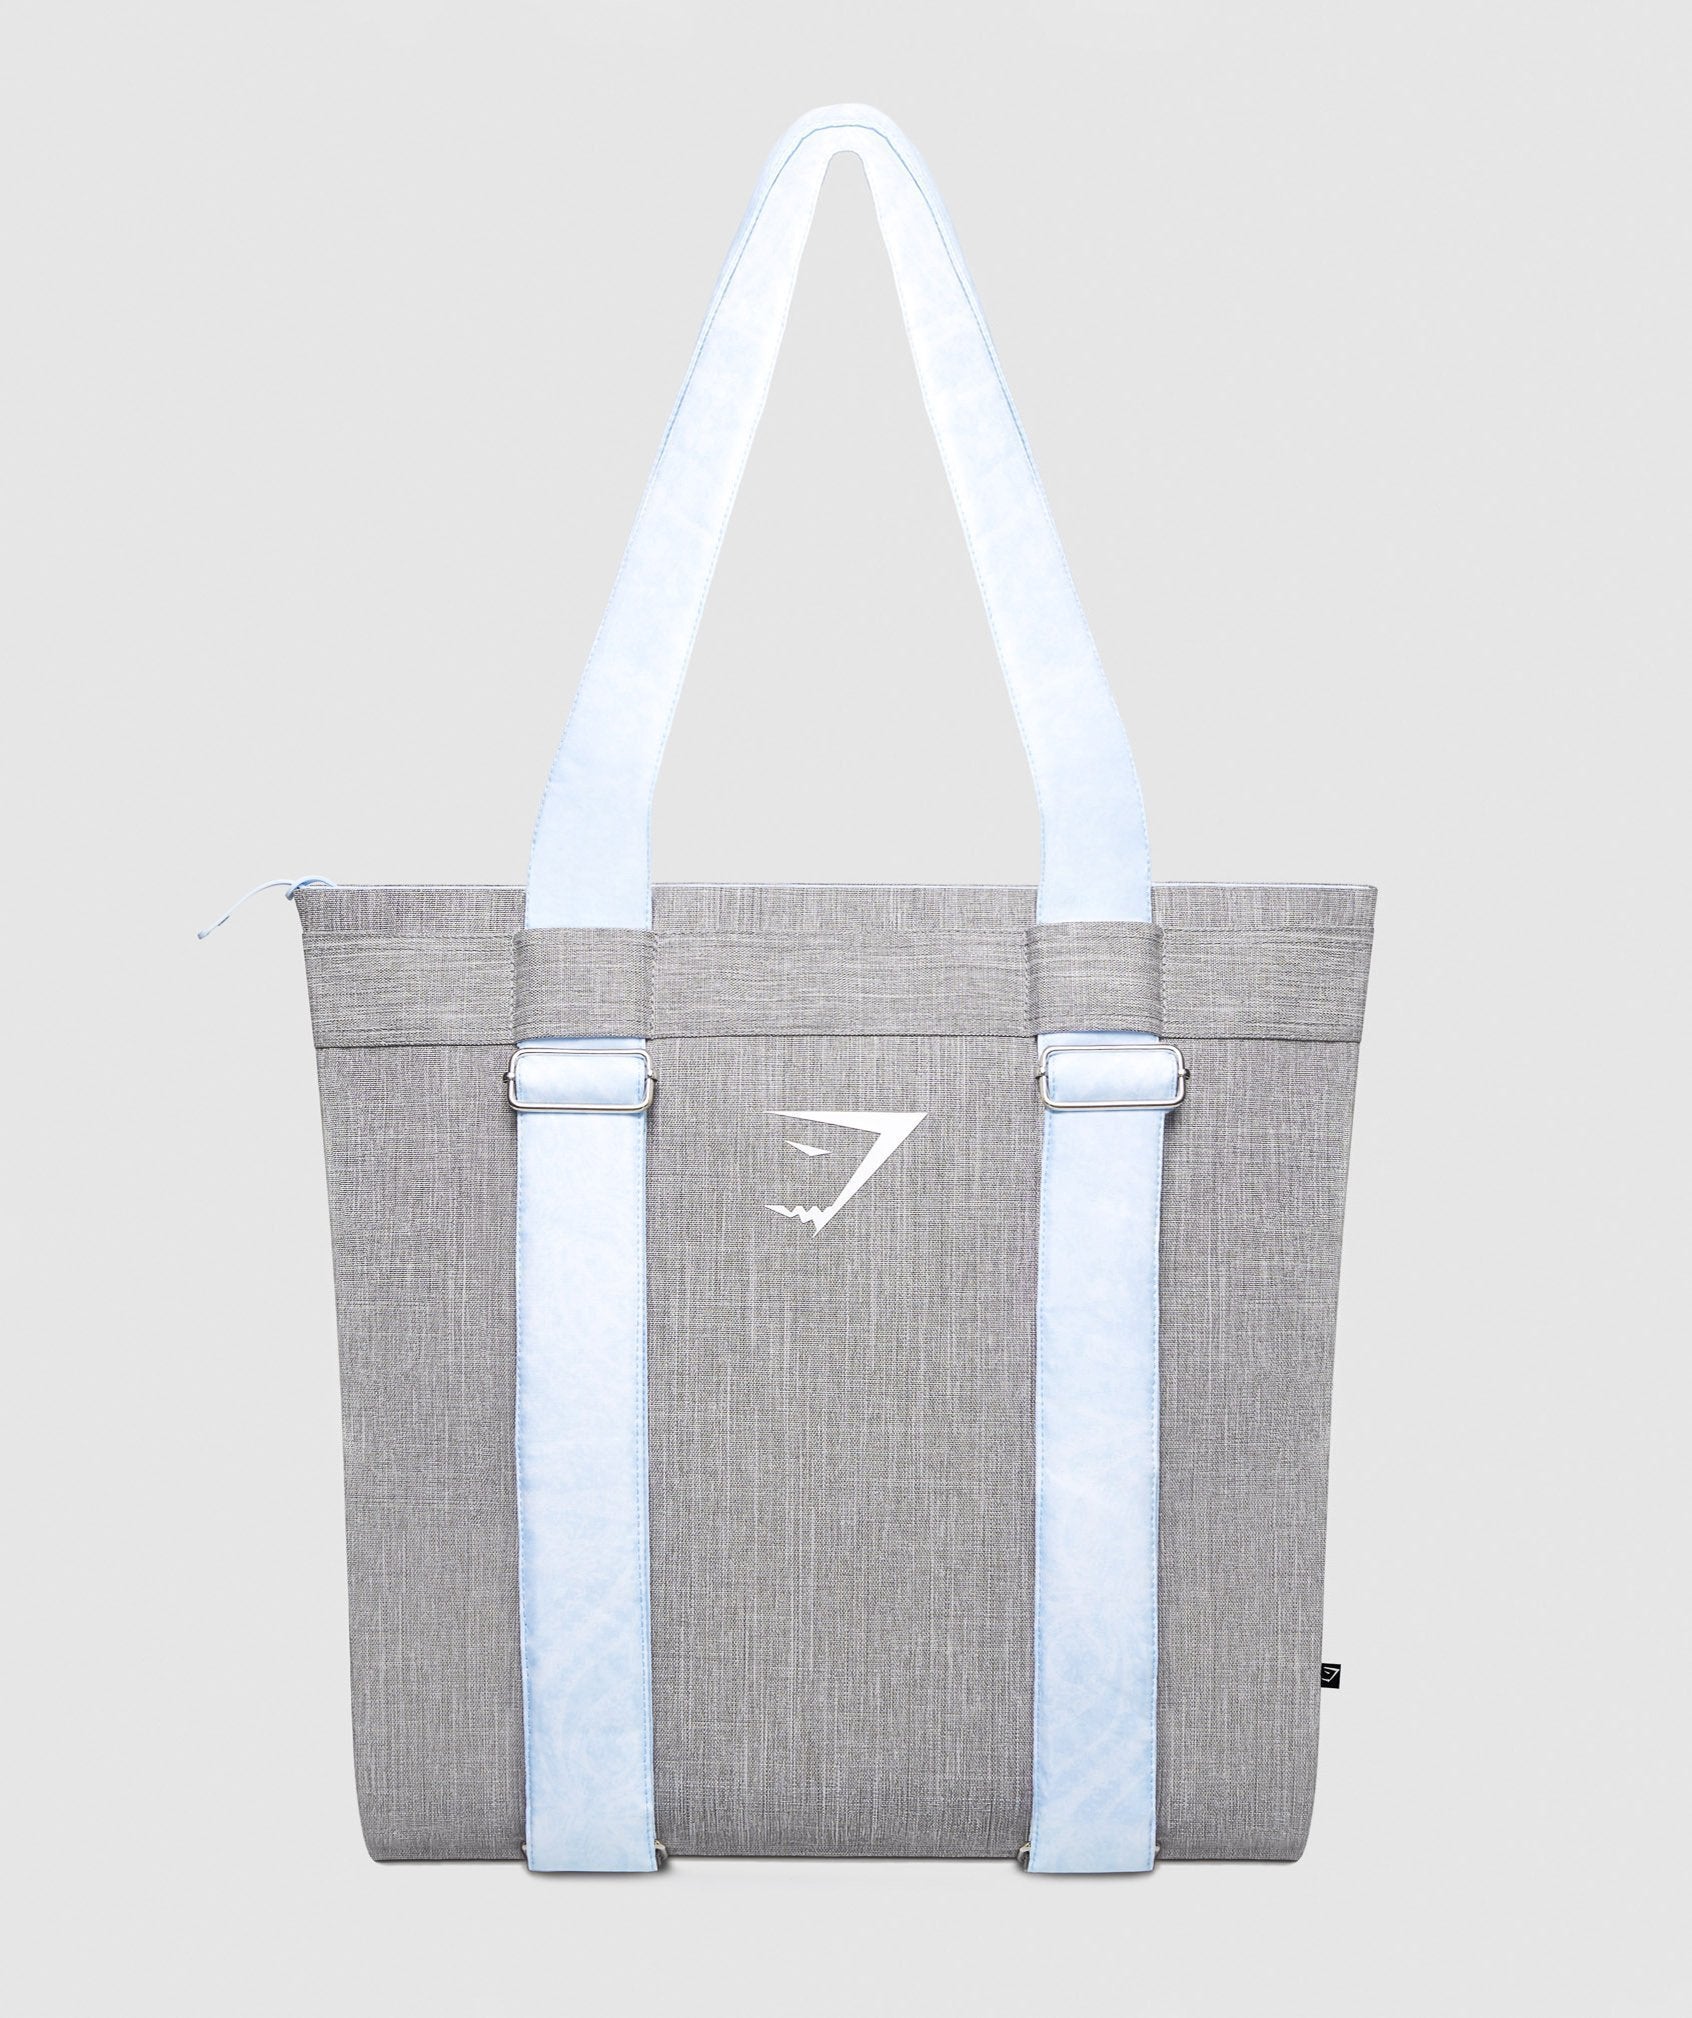 Studio Tote Bag in Light Grey - view 2